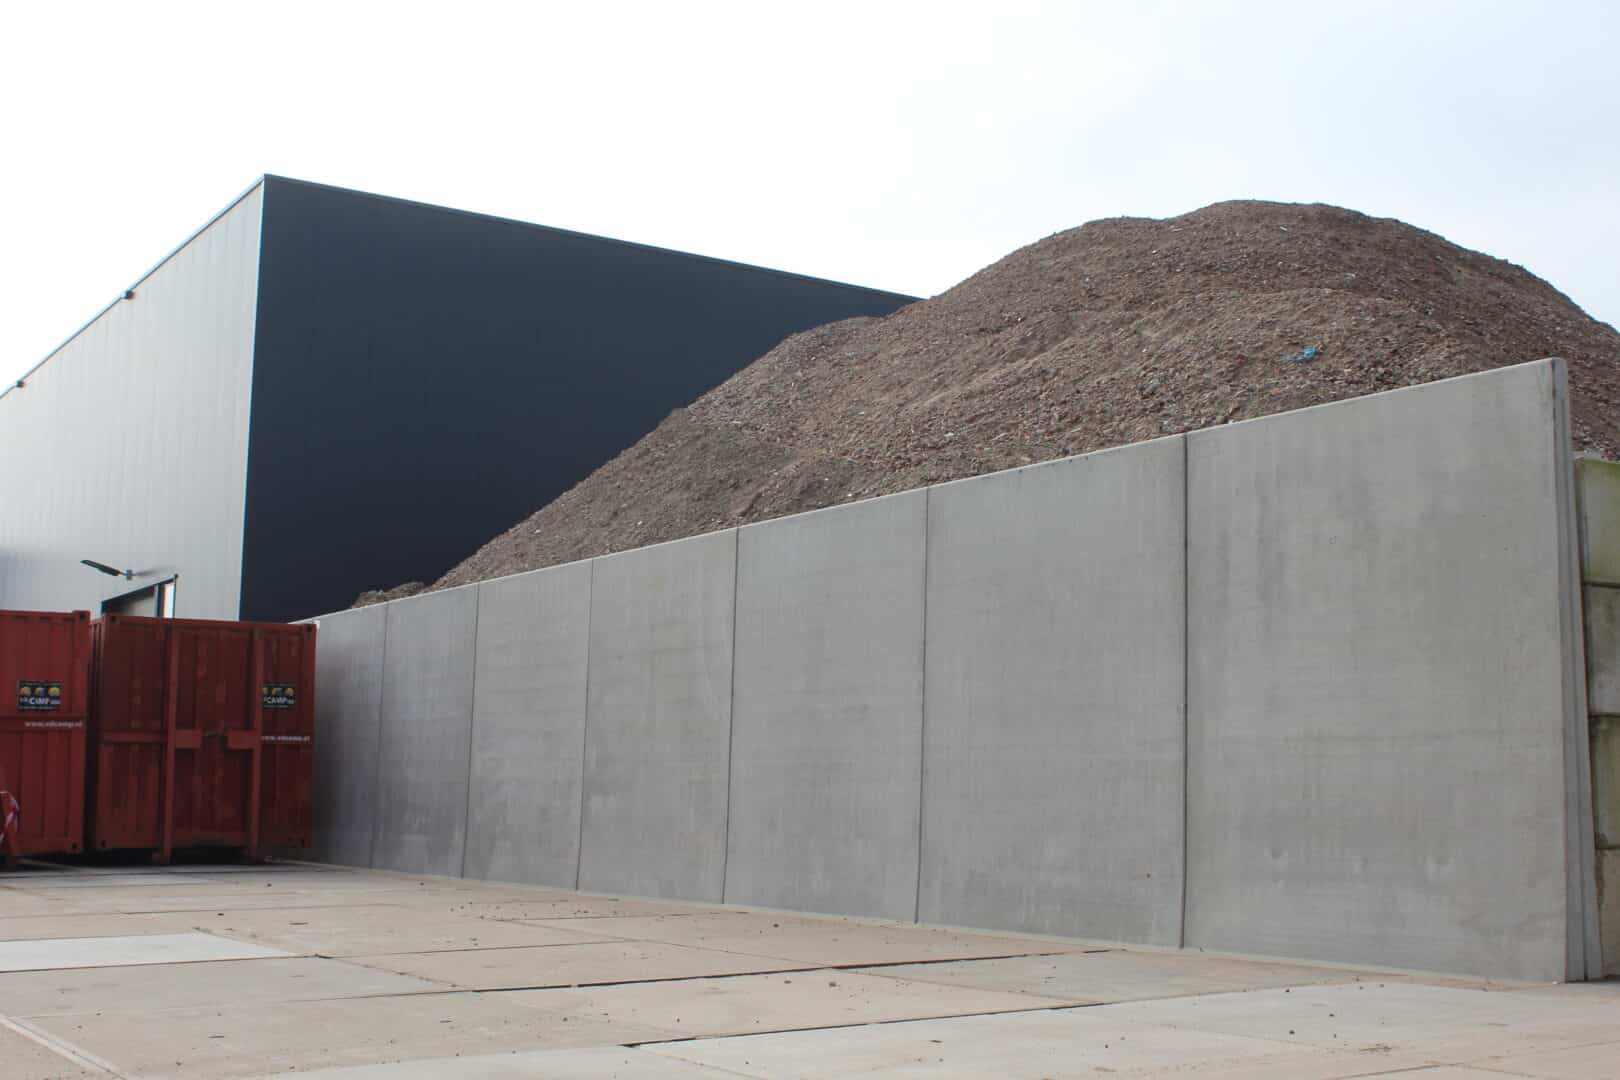 Bosch Beton - Opslagvakken voor zand, grind en grond in Oss